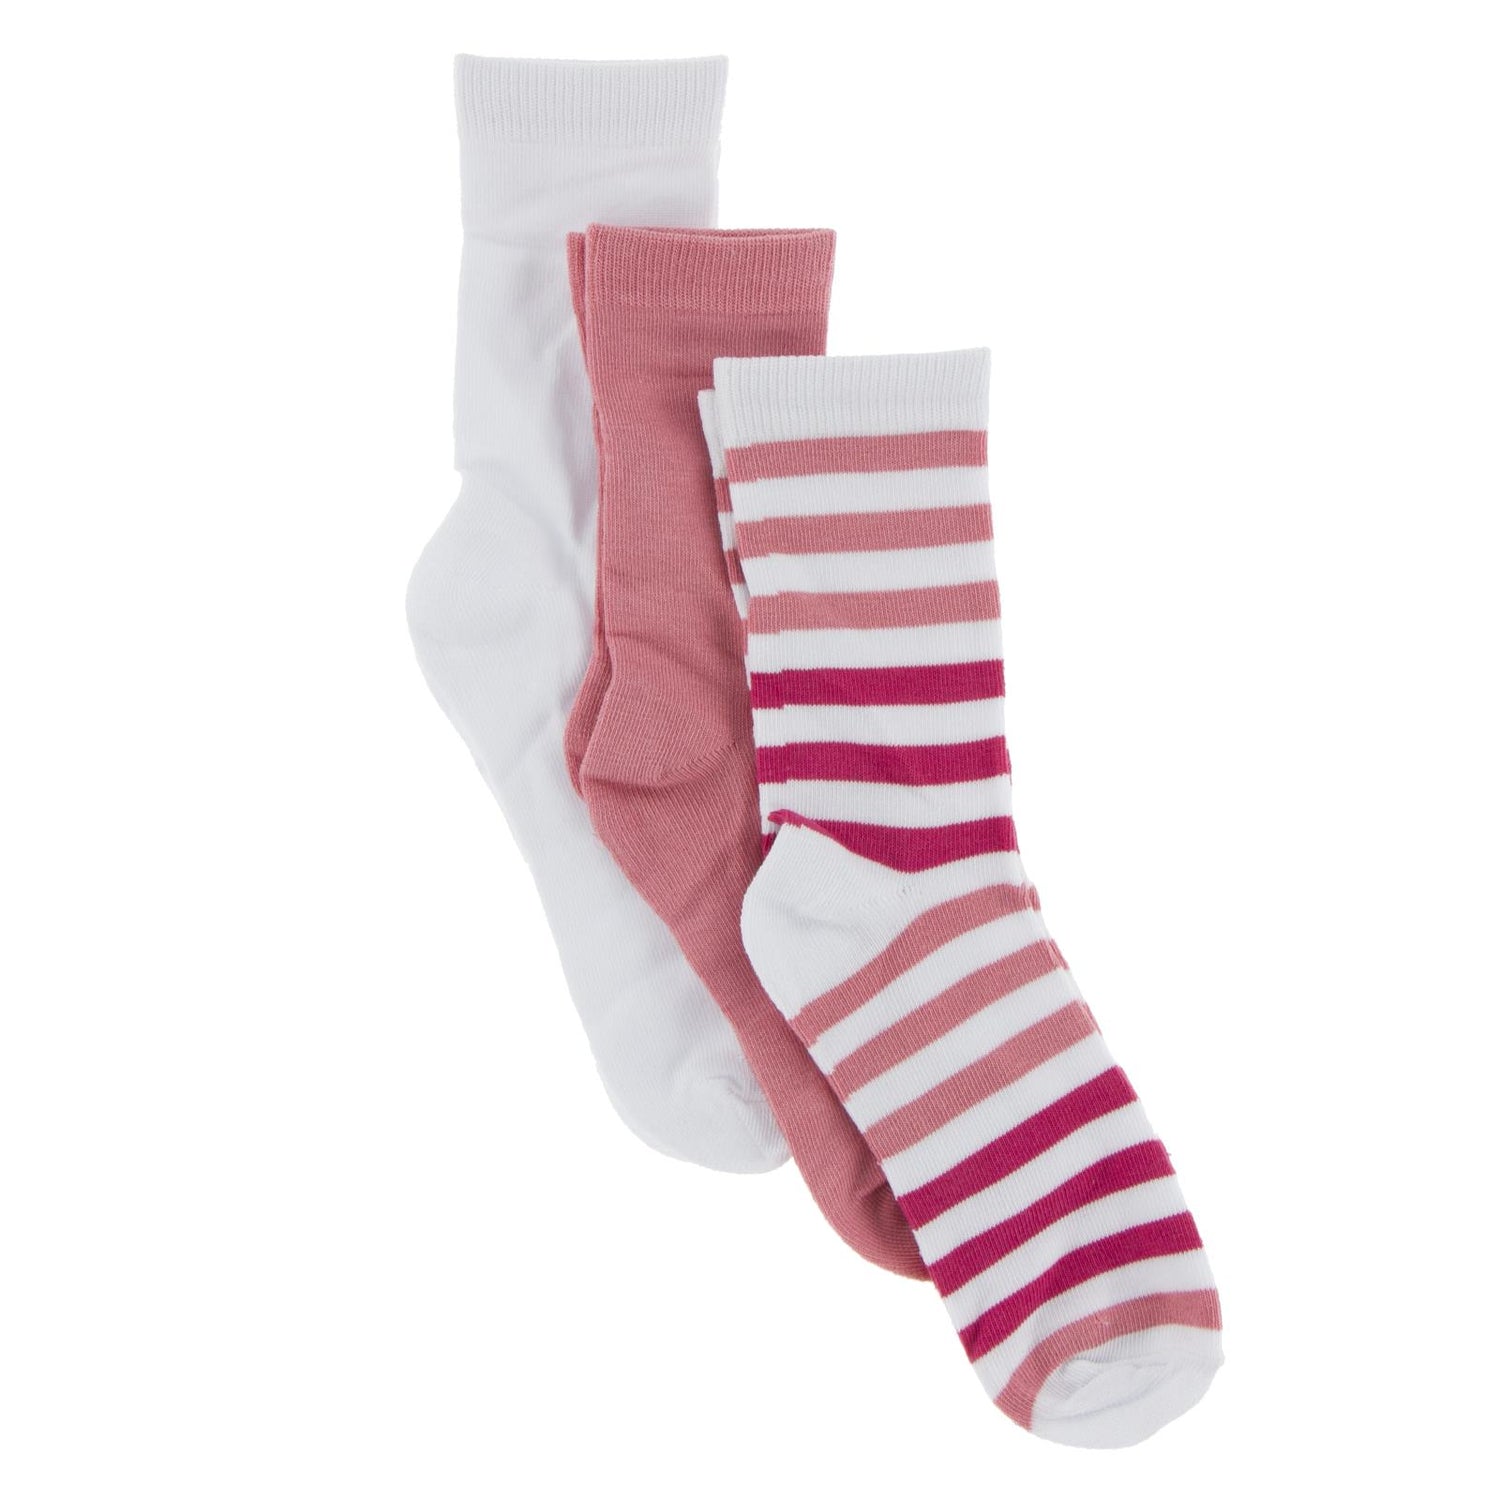 Sock Set in Strawberry, Forest Fruit Stripe & Natural